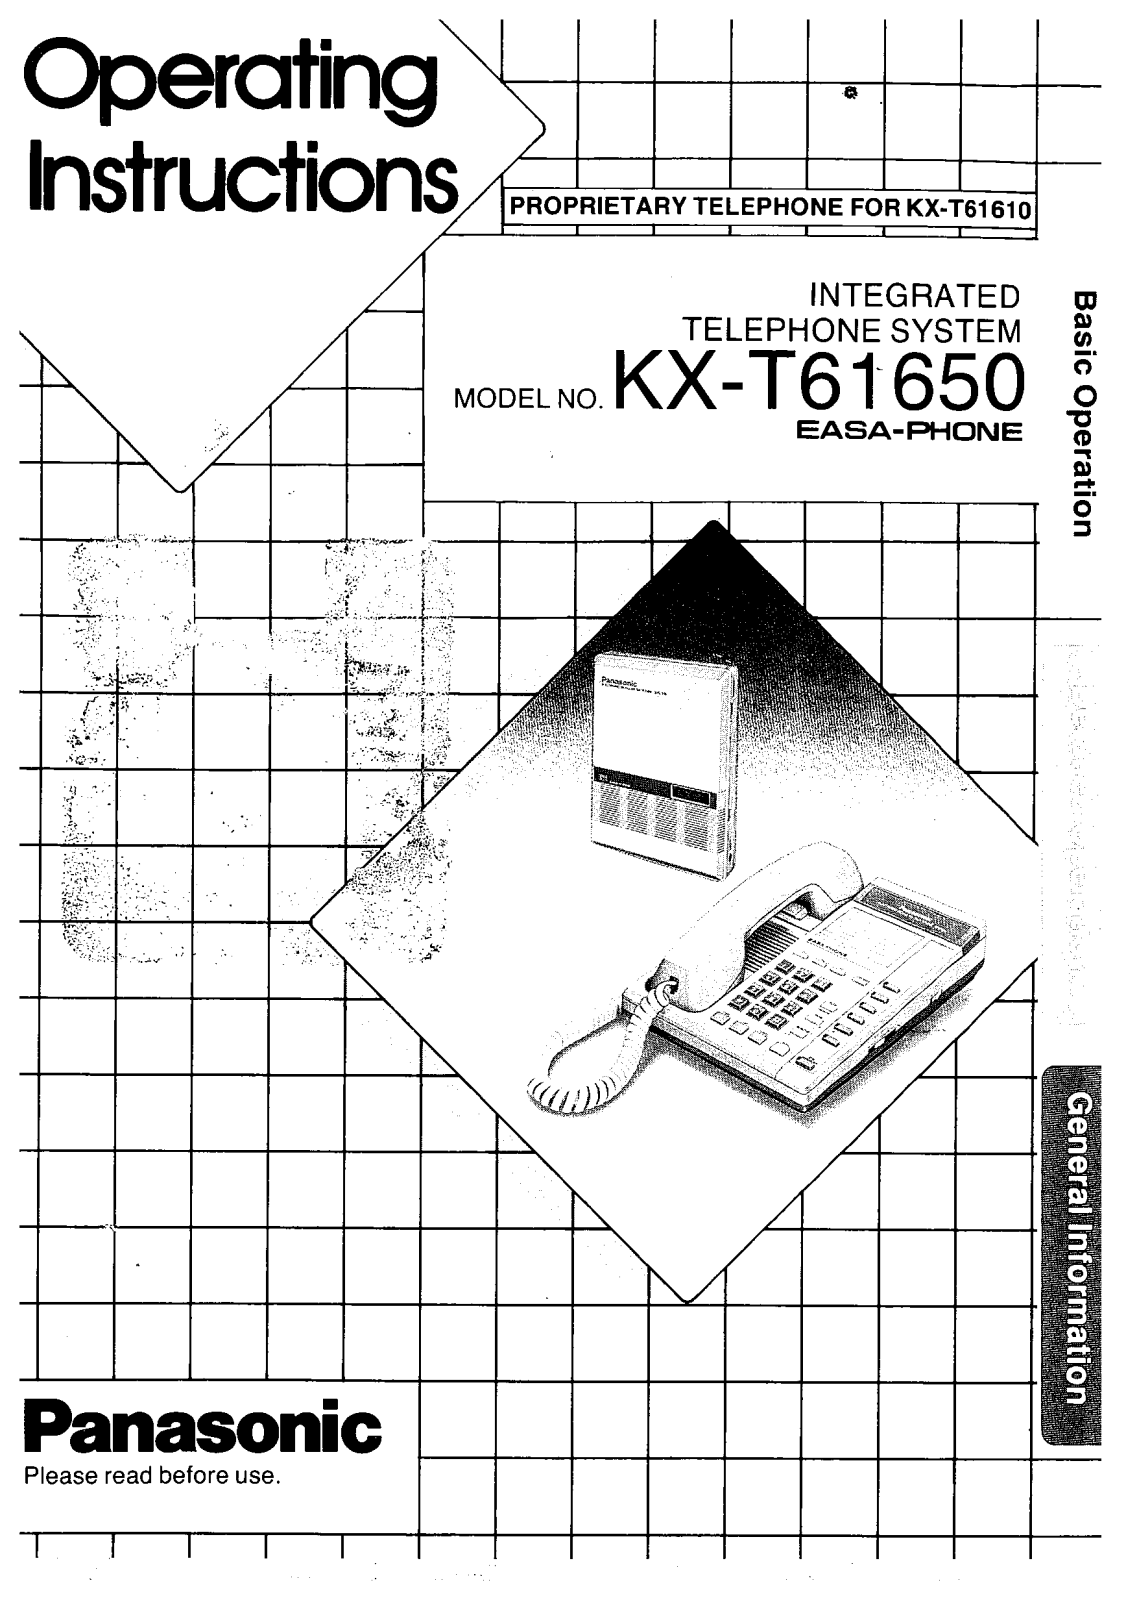 PANASONIC KX-T61650 User Guide